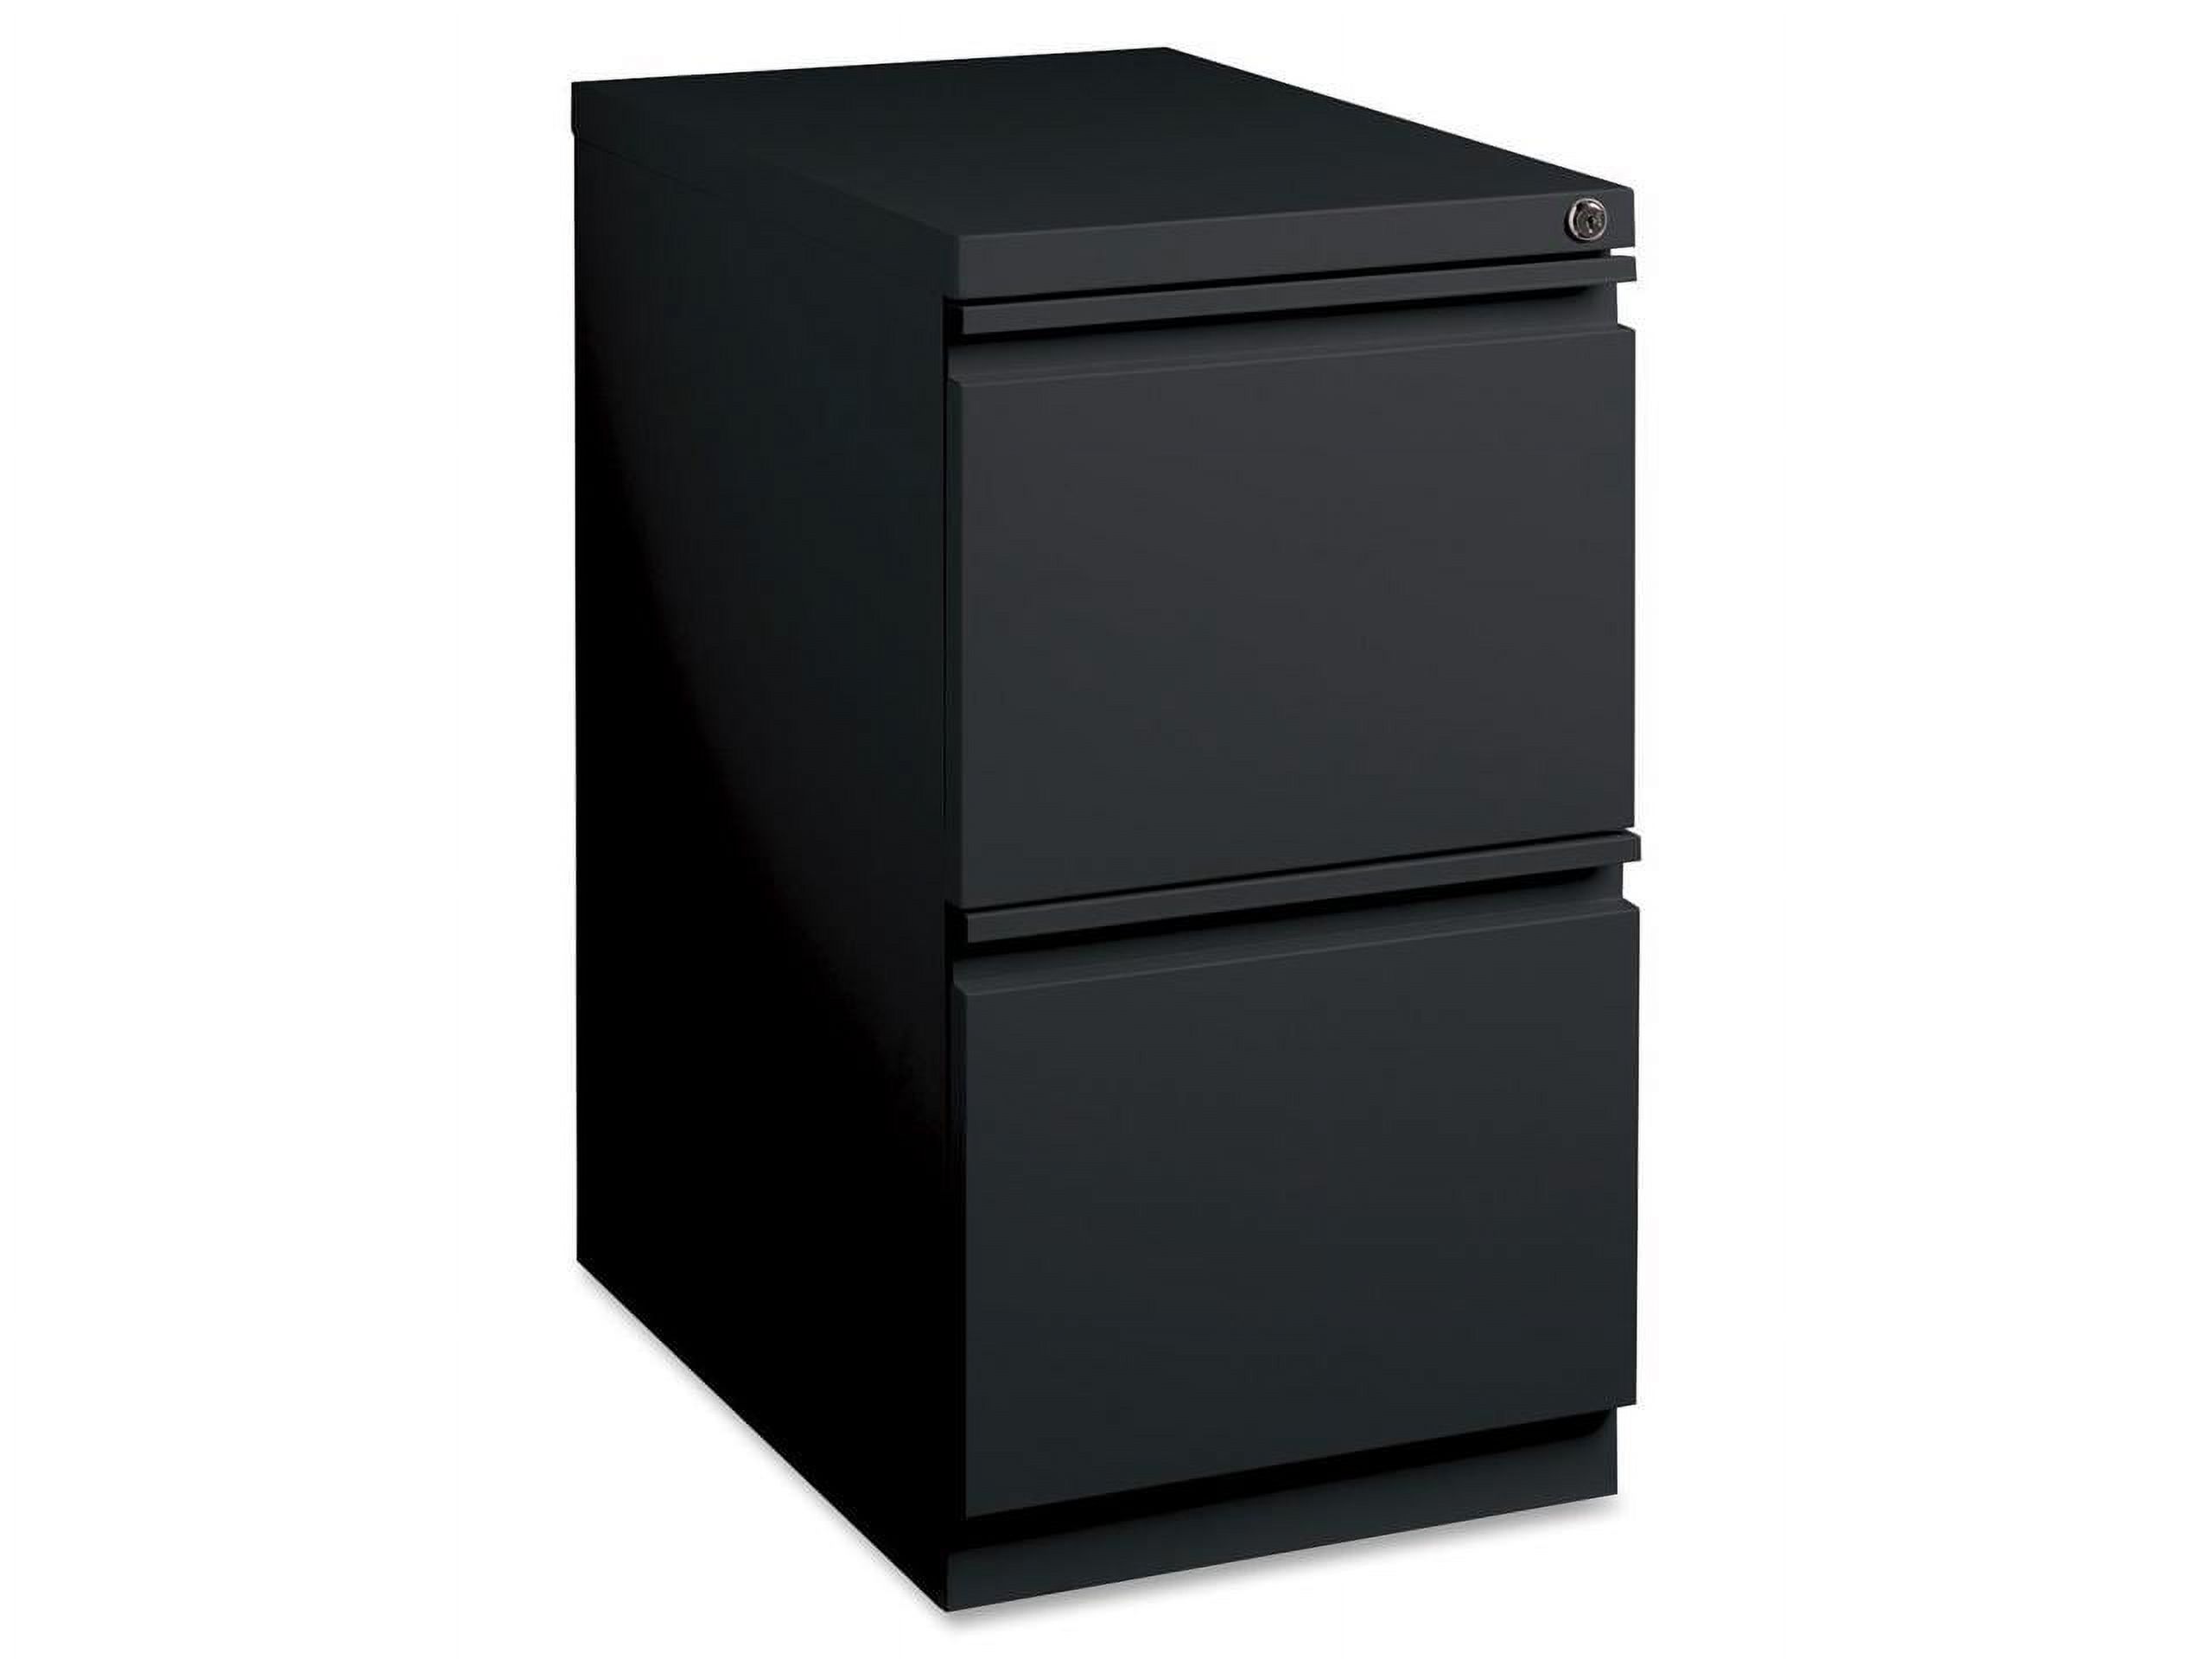 2 Drawers Vertical Steel Lockable Filing Cabinet, Black - image 2 of 12